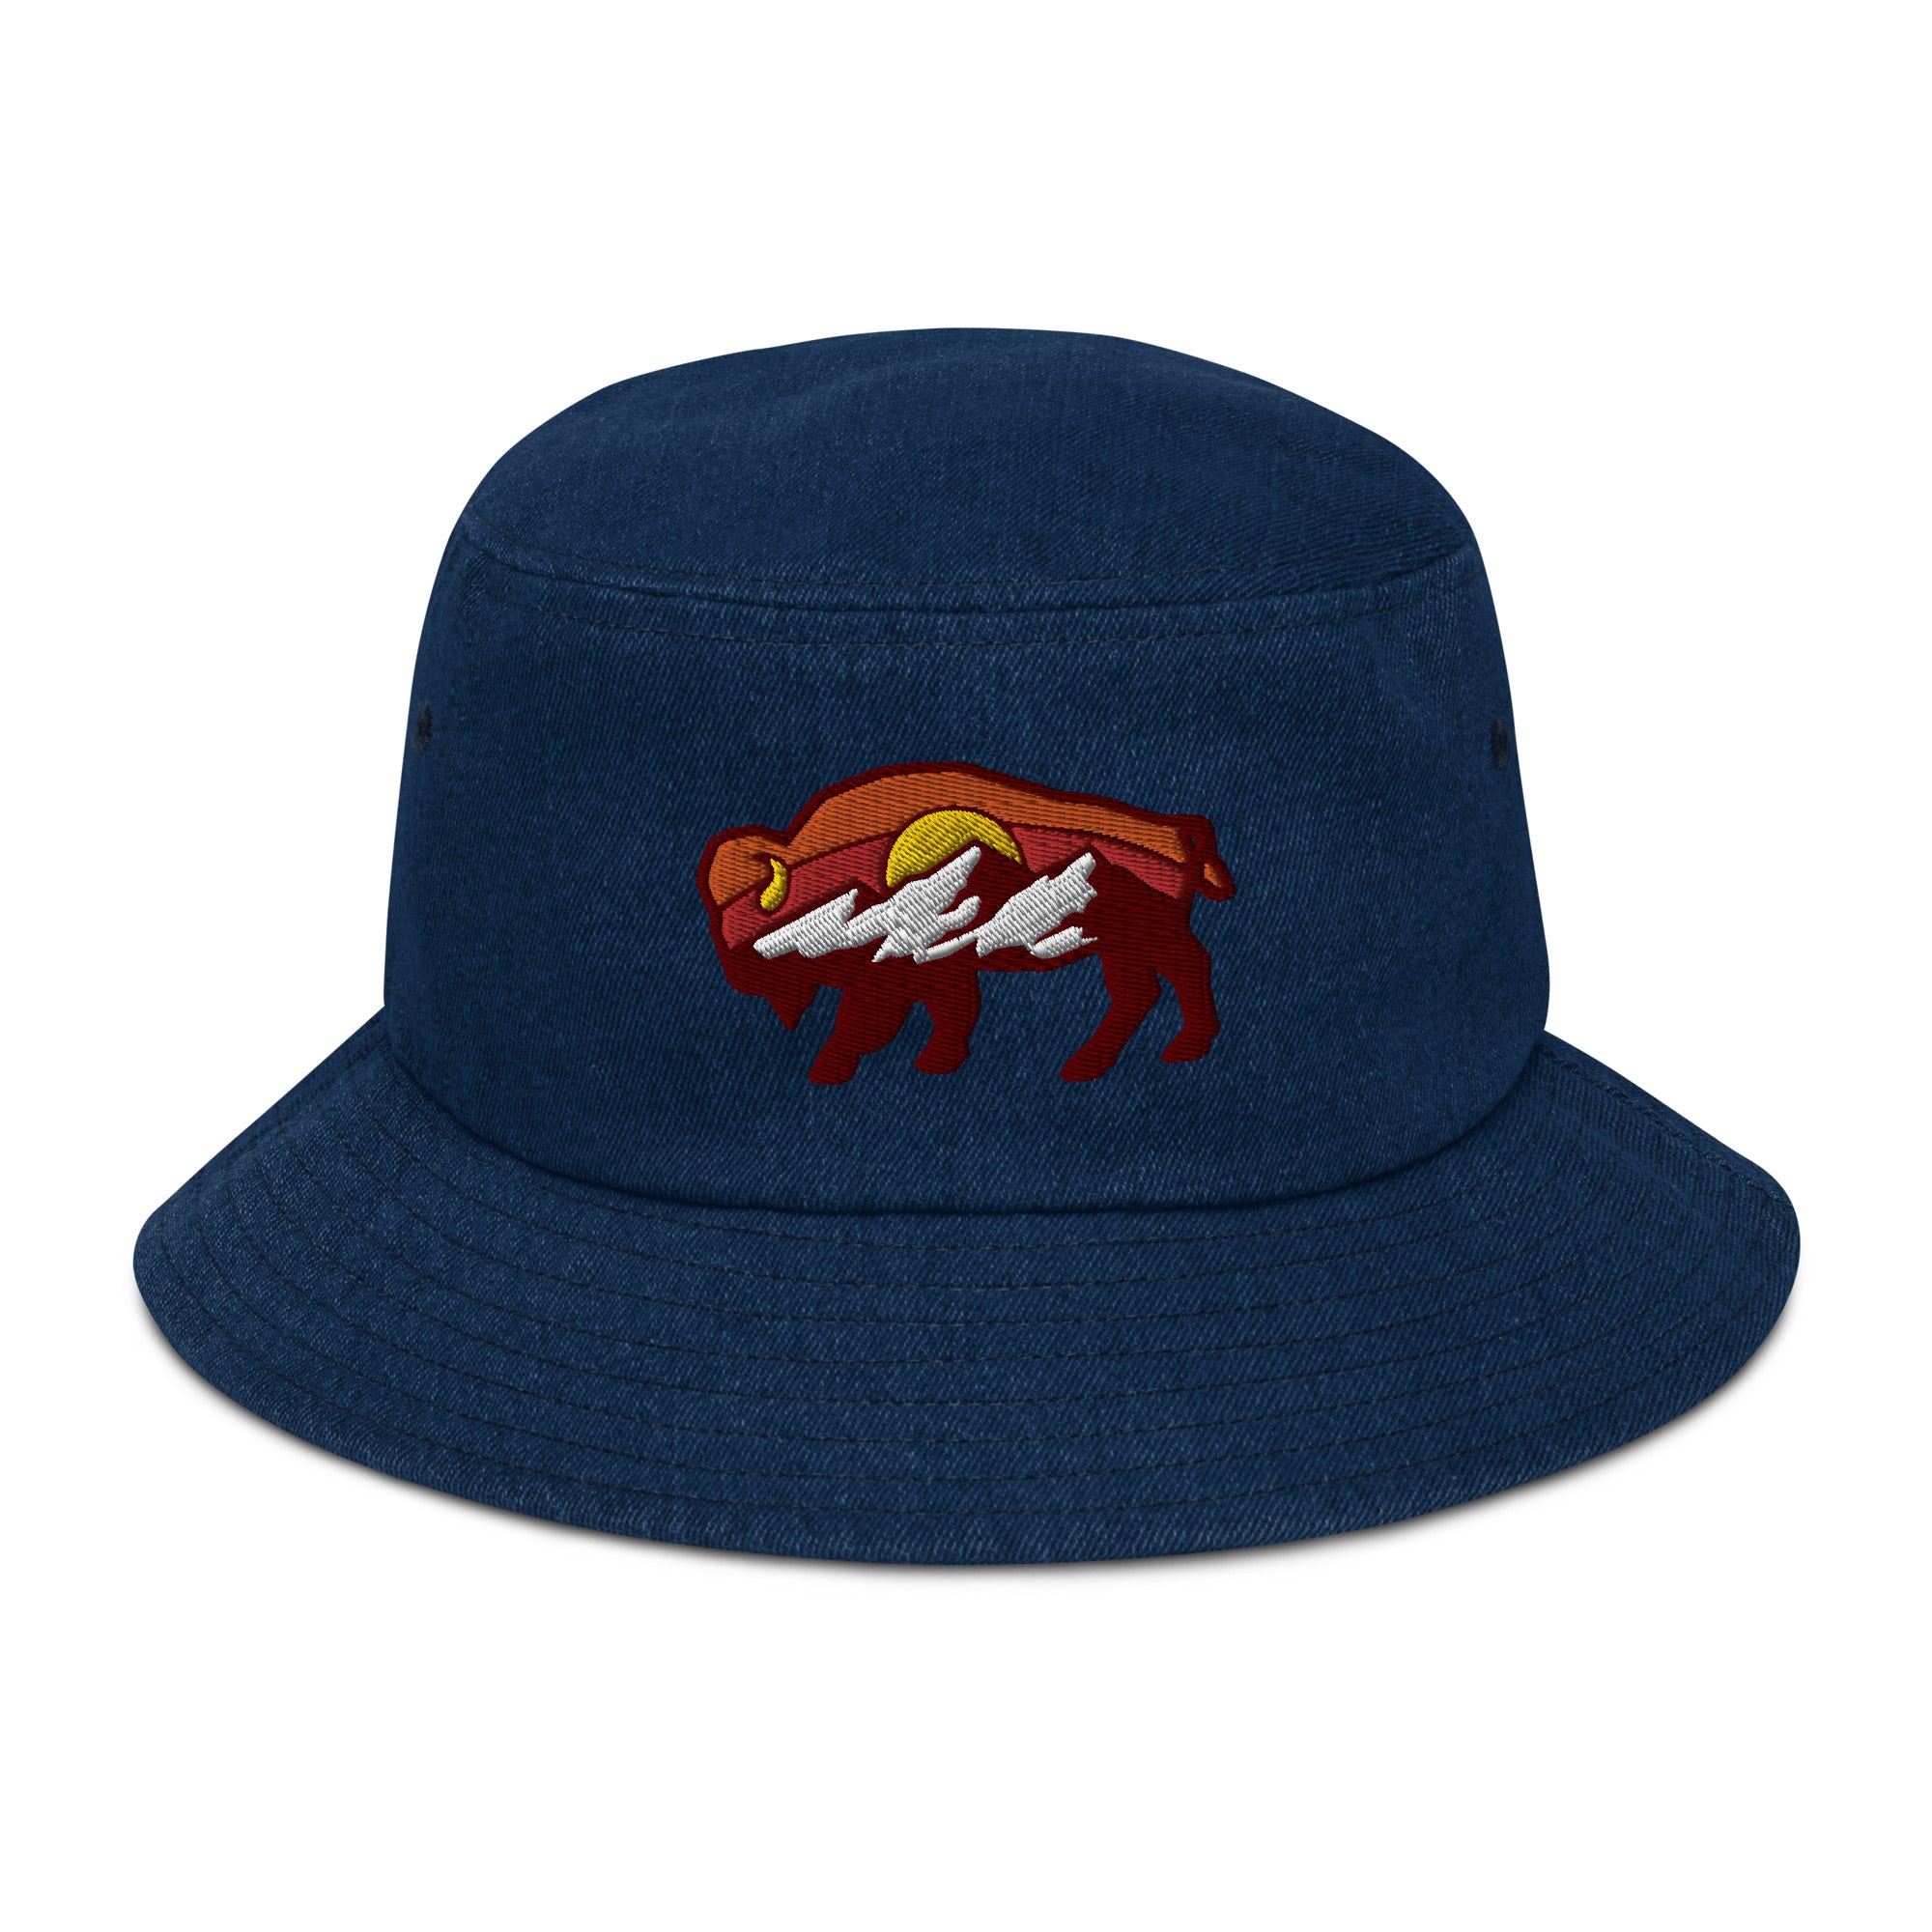 Liberty Bison Denim Bucket Hat